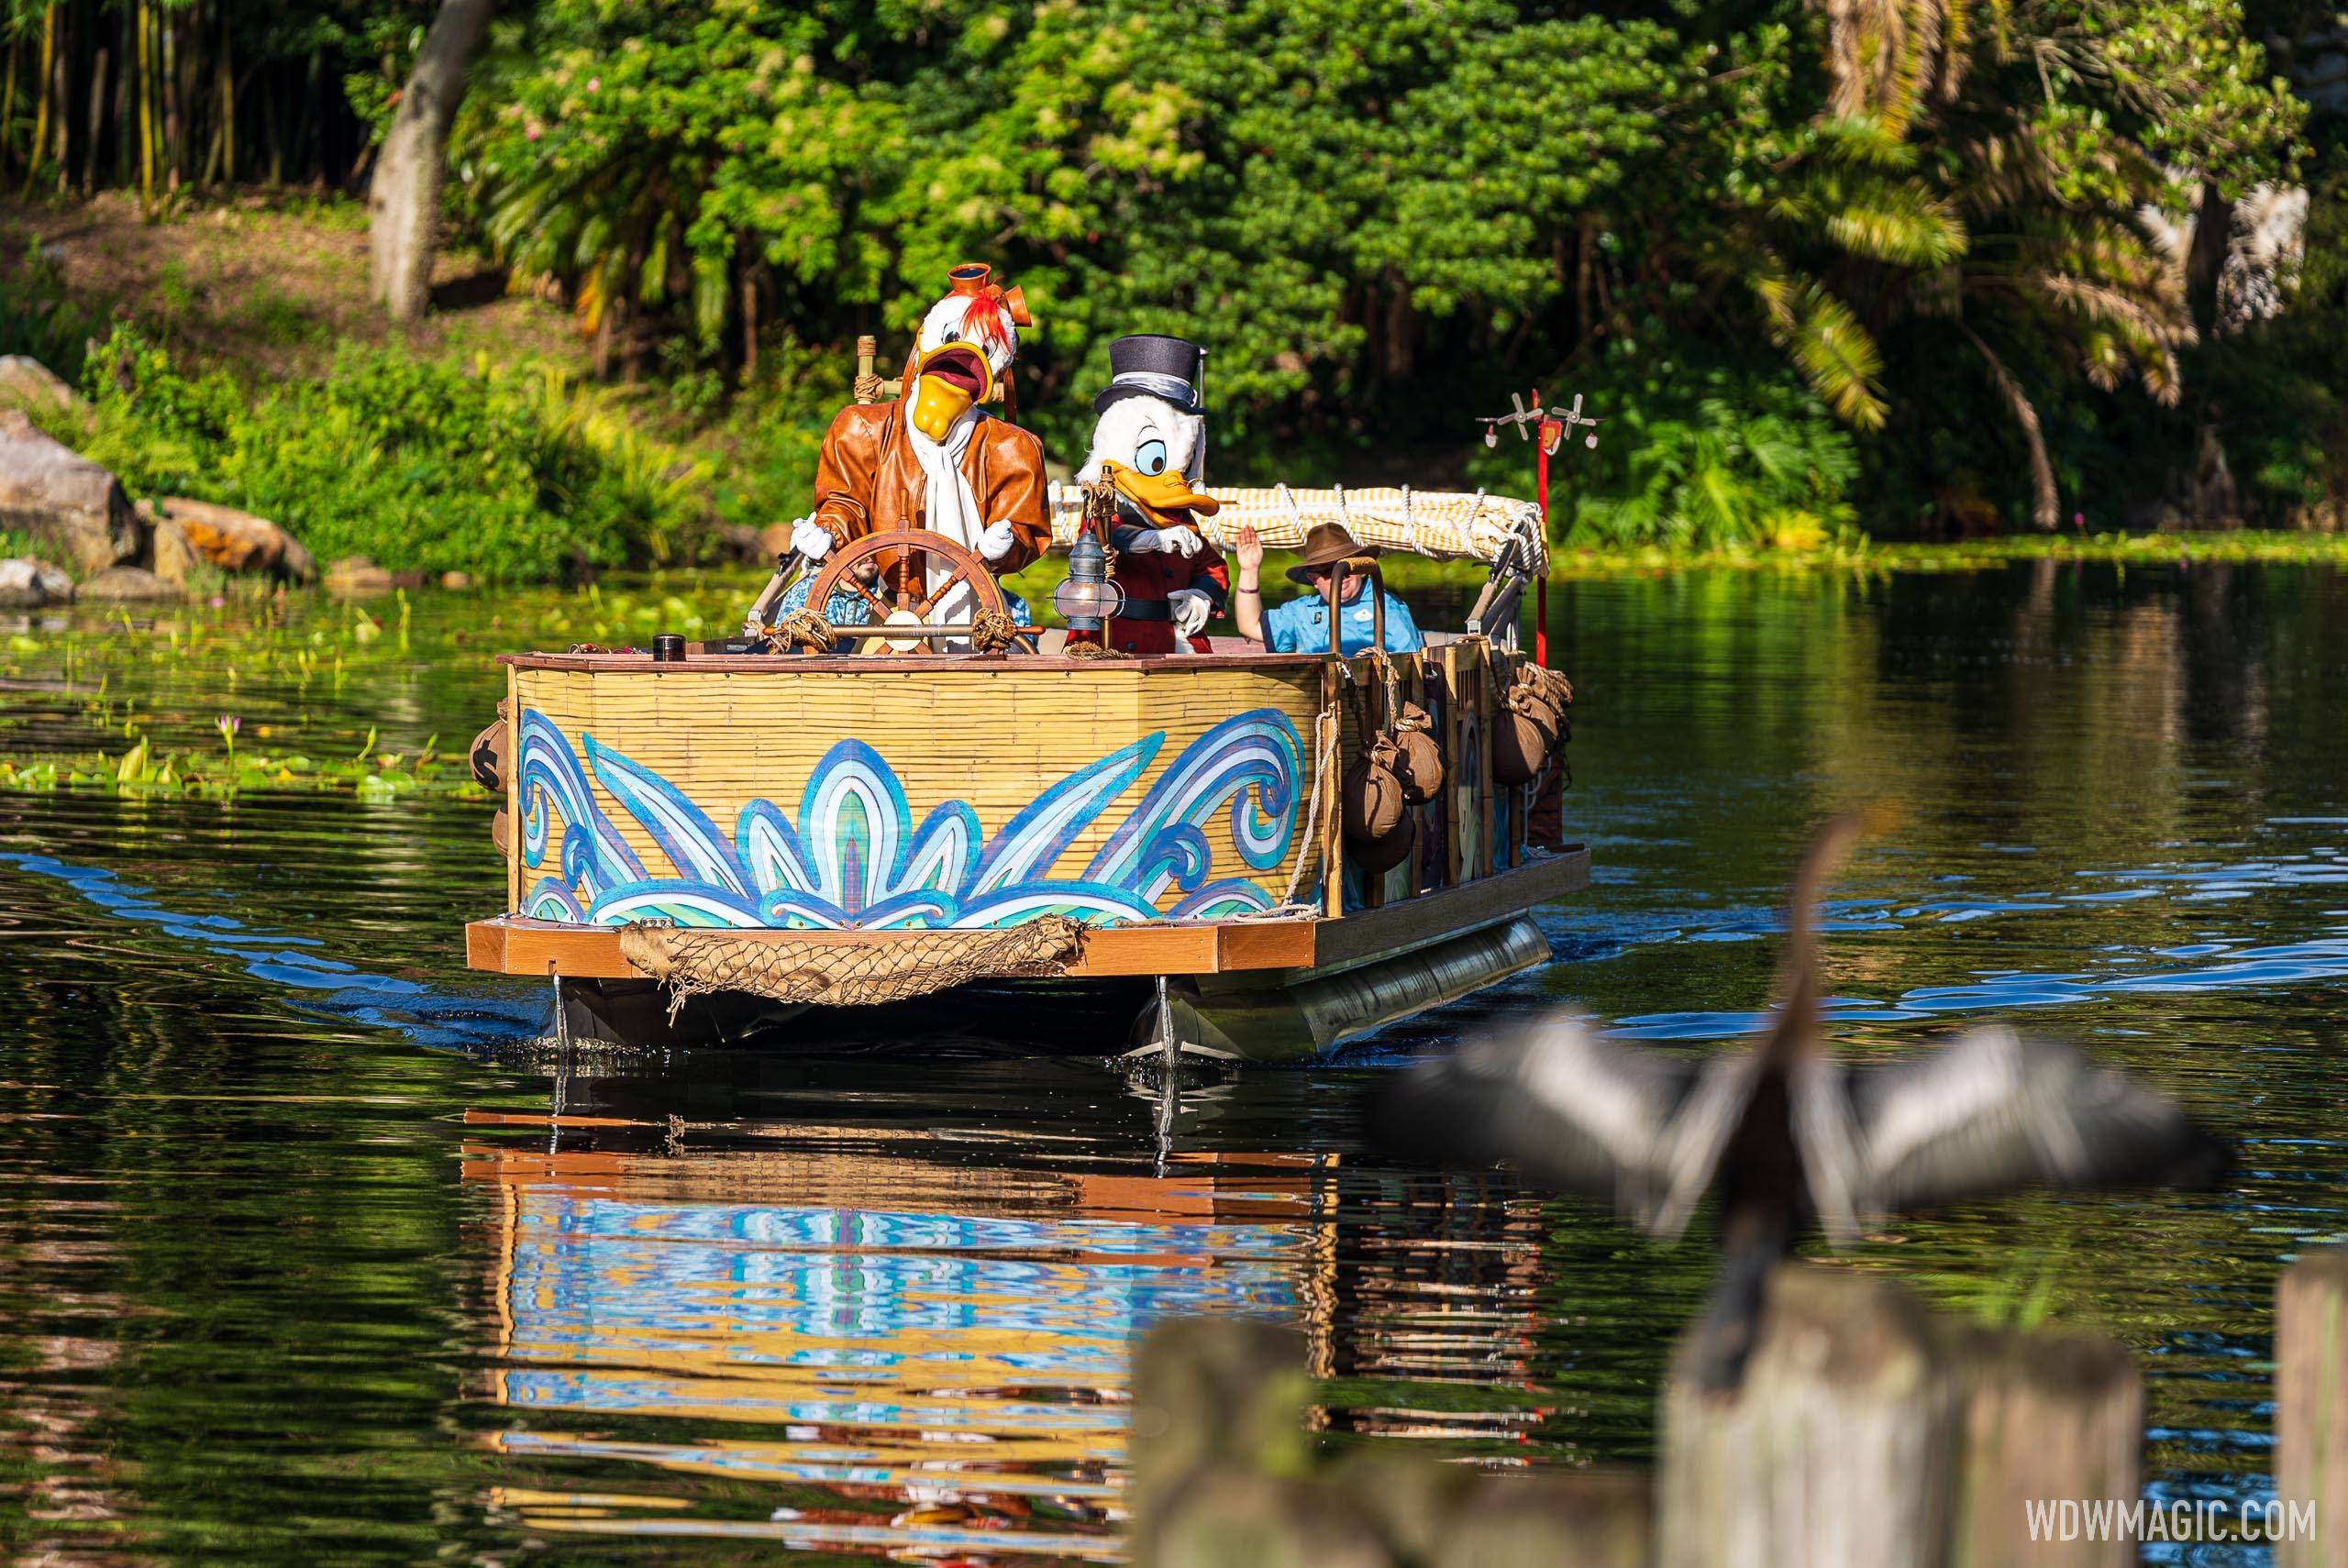 Adventurer's Flotilla – Disney Ducks and Up